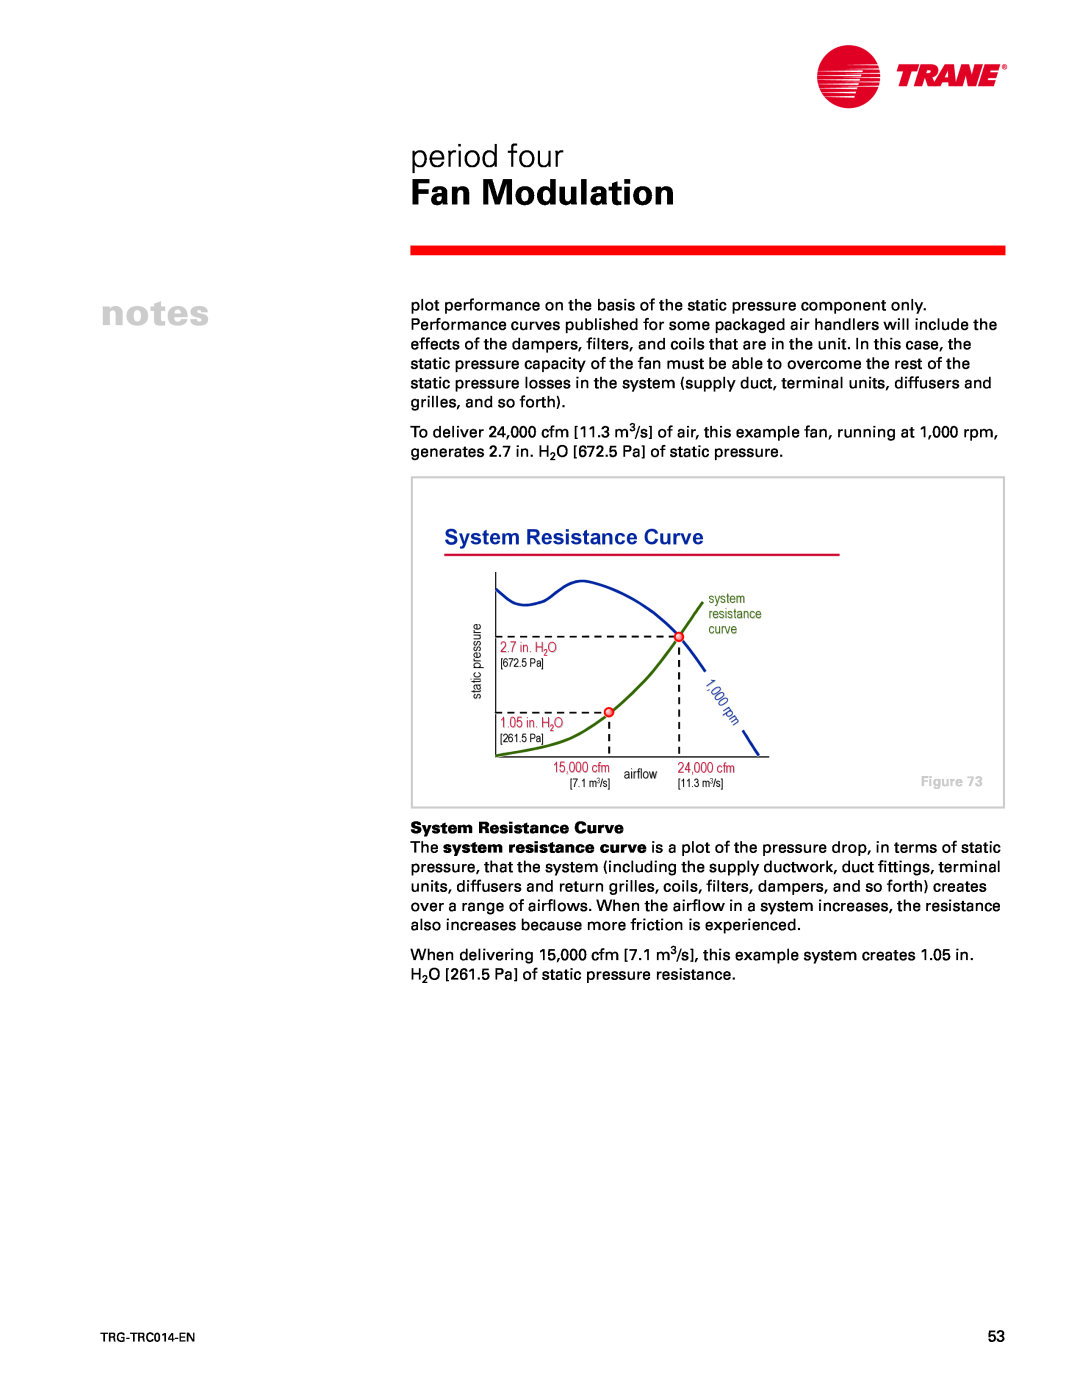 Trane TRG-TRC014-EN manual period four, System Resistance Curve, Fan Modulation 